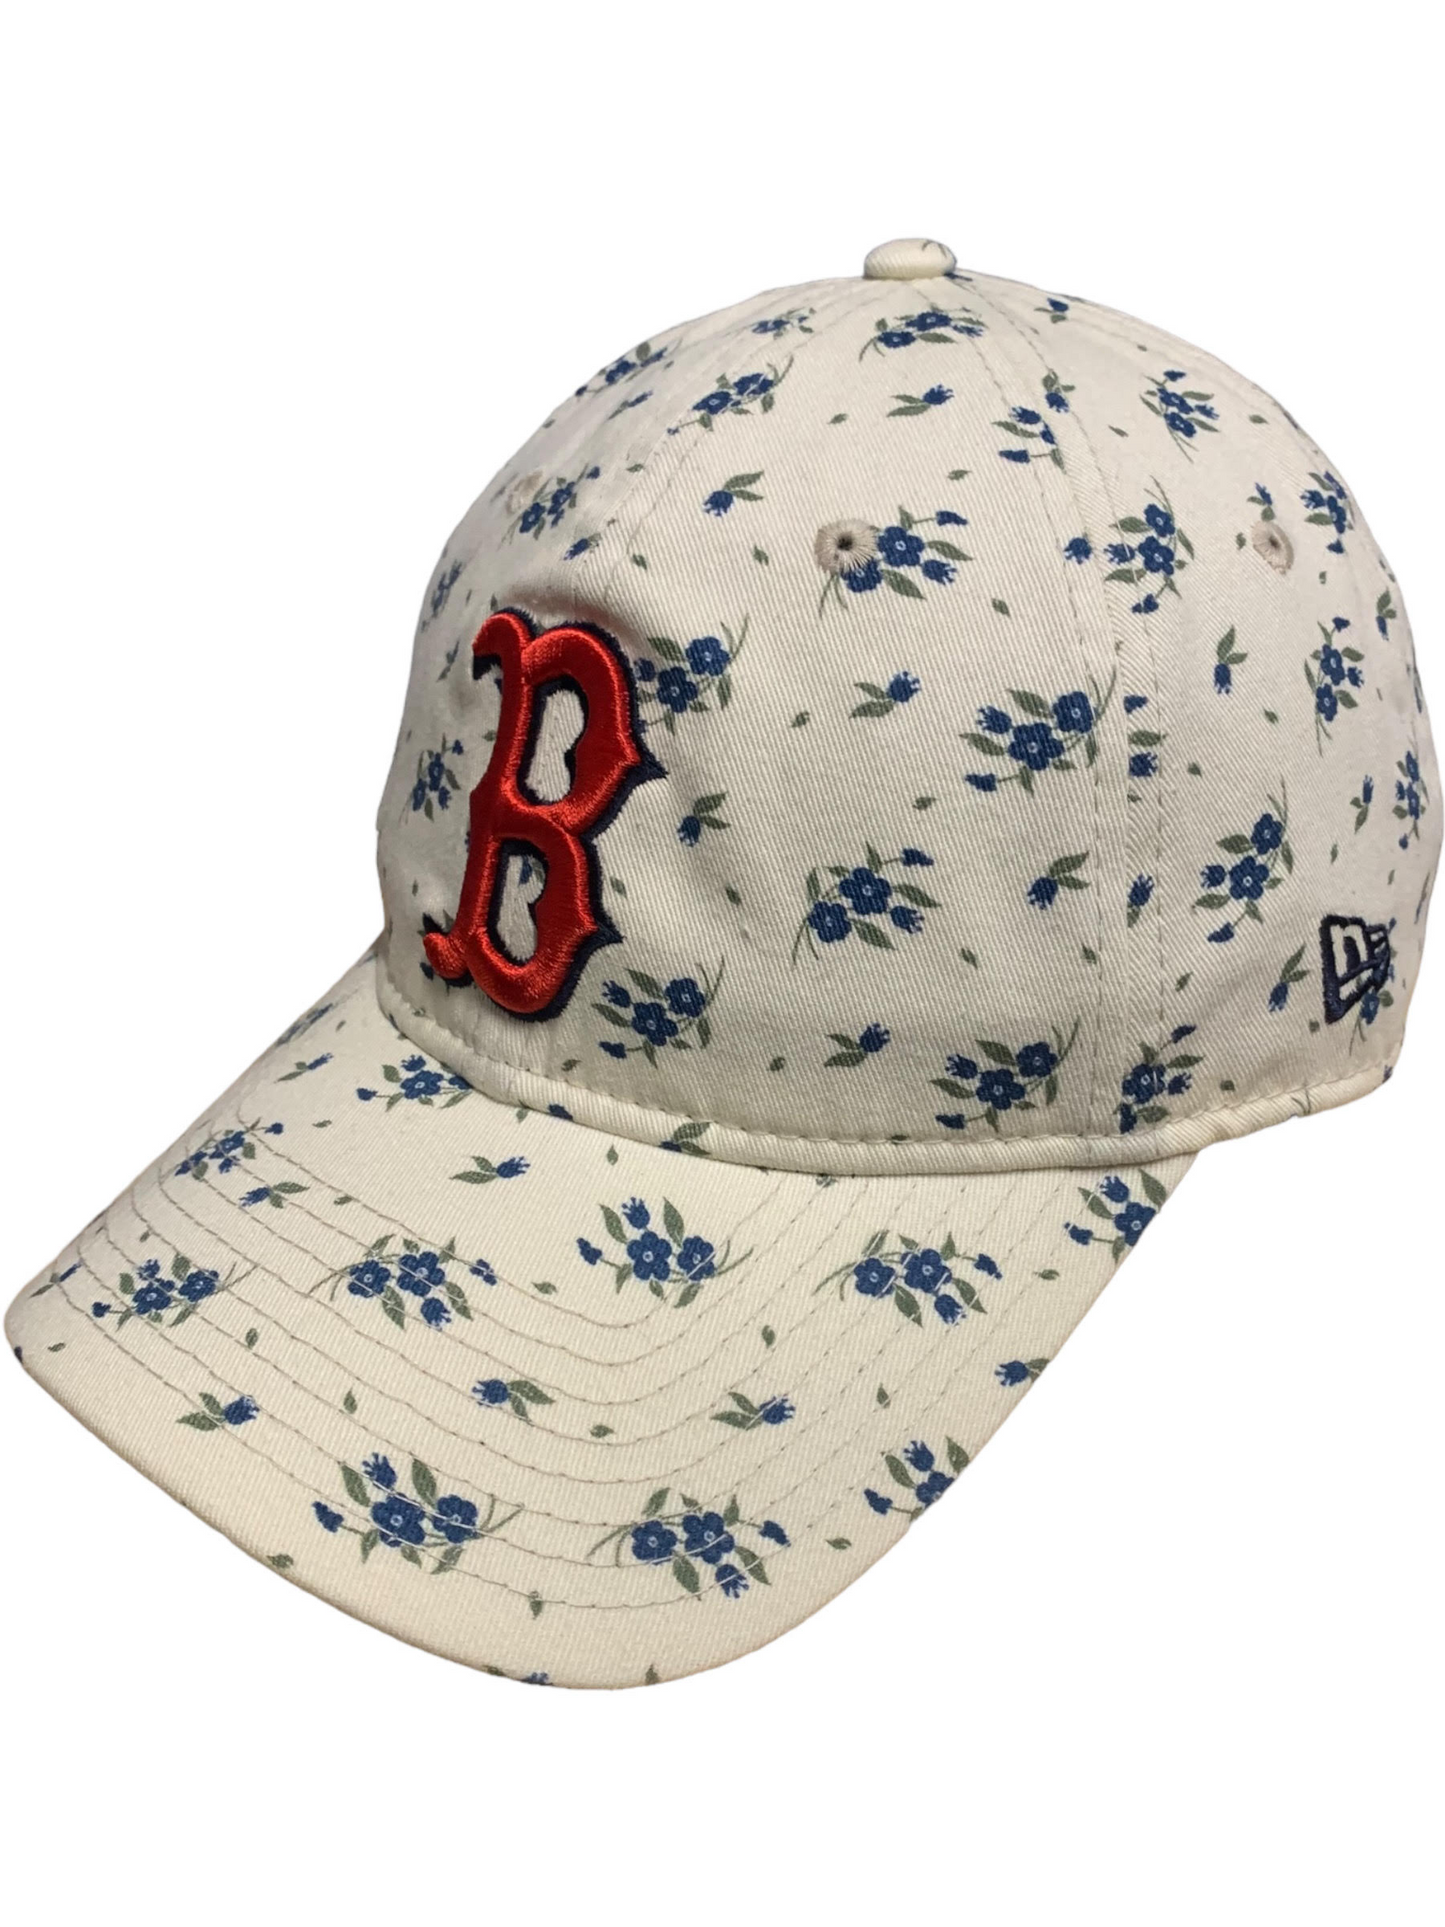 BOSTON RED SOX WOMEN'S BLOOM 9TWENTY ADJUSTABLE HAT